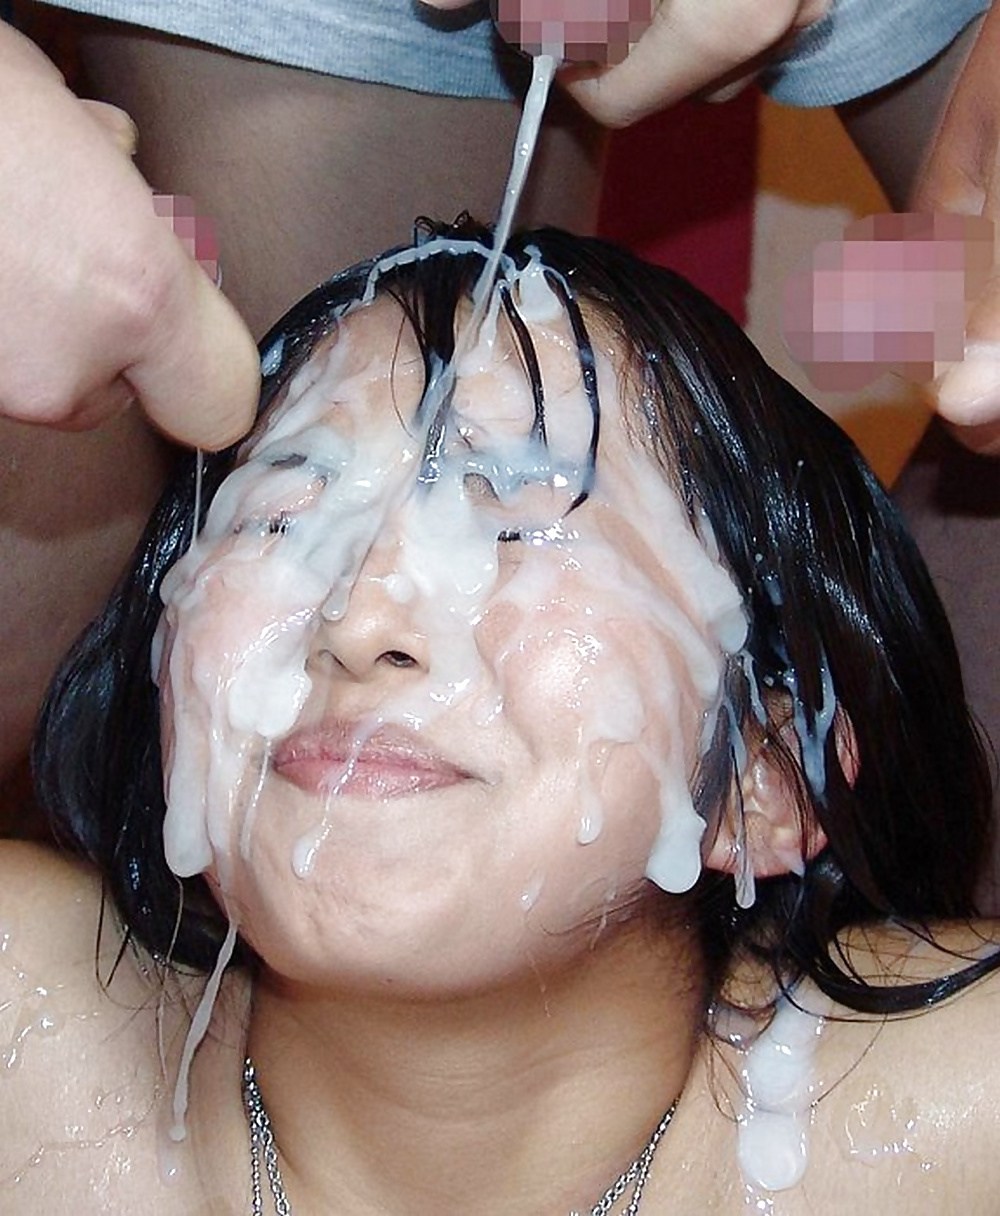 Asian Face - Asian Girl Covered in Sperm (66 photos) - porn photo